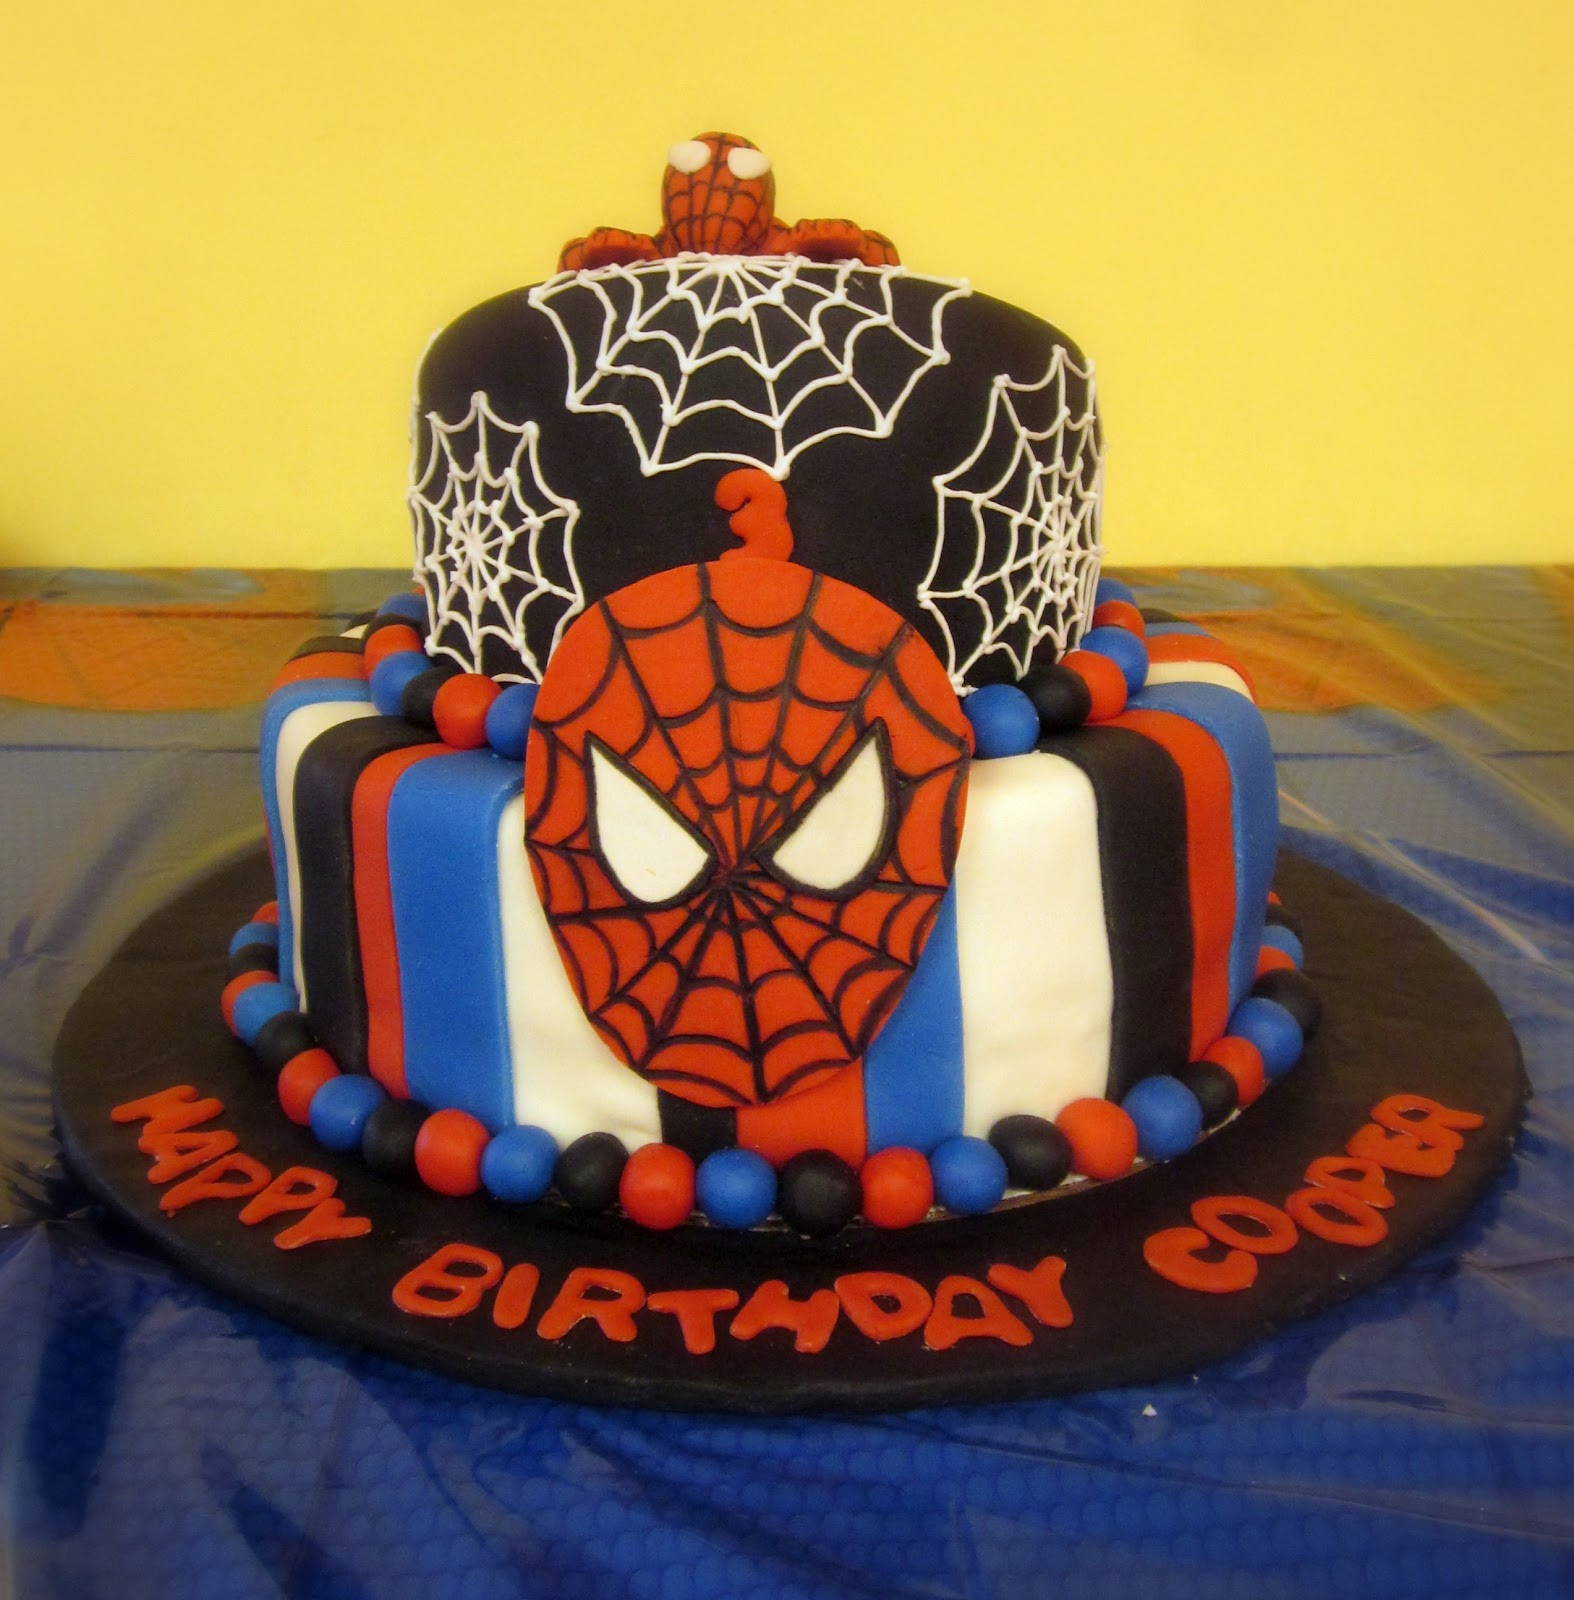 Best ideas about Spiderman Birthday Cake
. Save or Pin Darlin Designs Spiderman Birthday Cake Now.